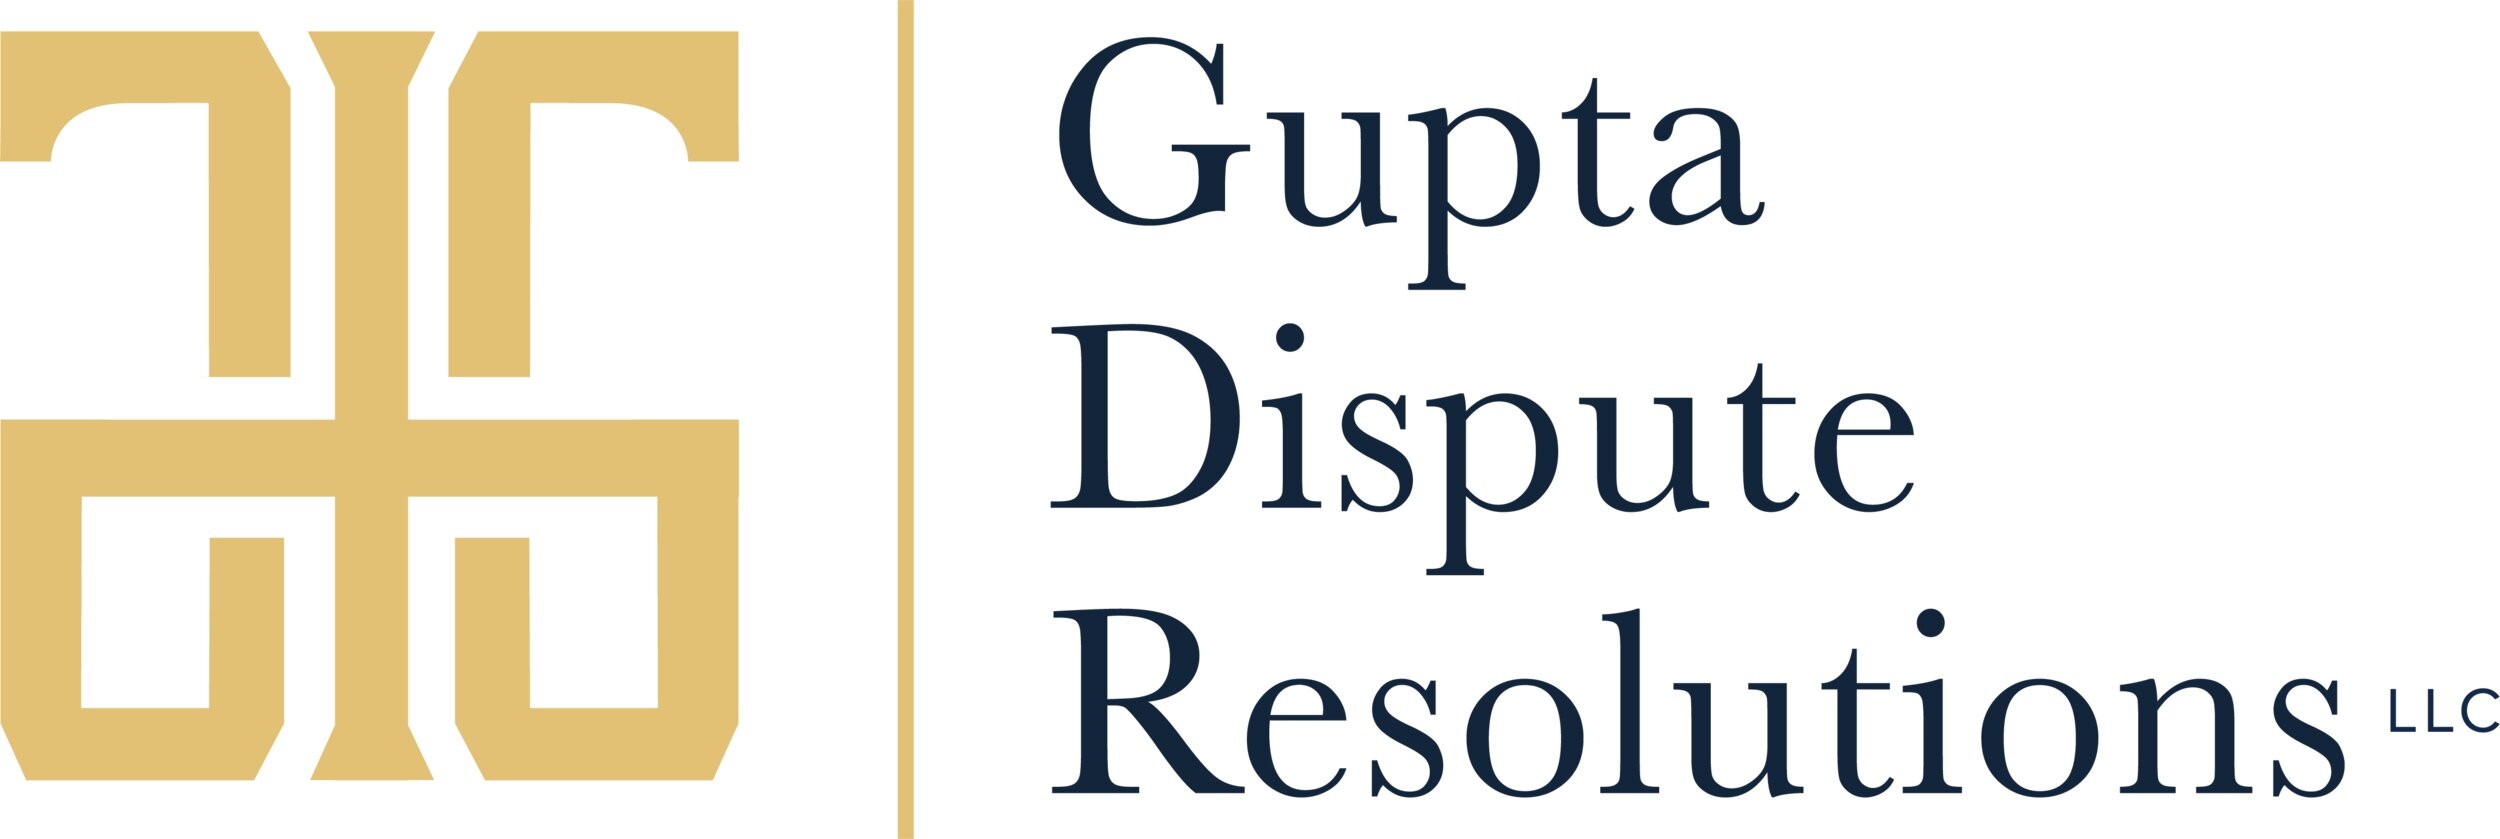 Gupta Dispute Resolutions LLC 